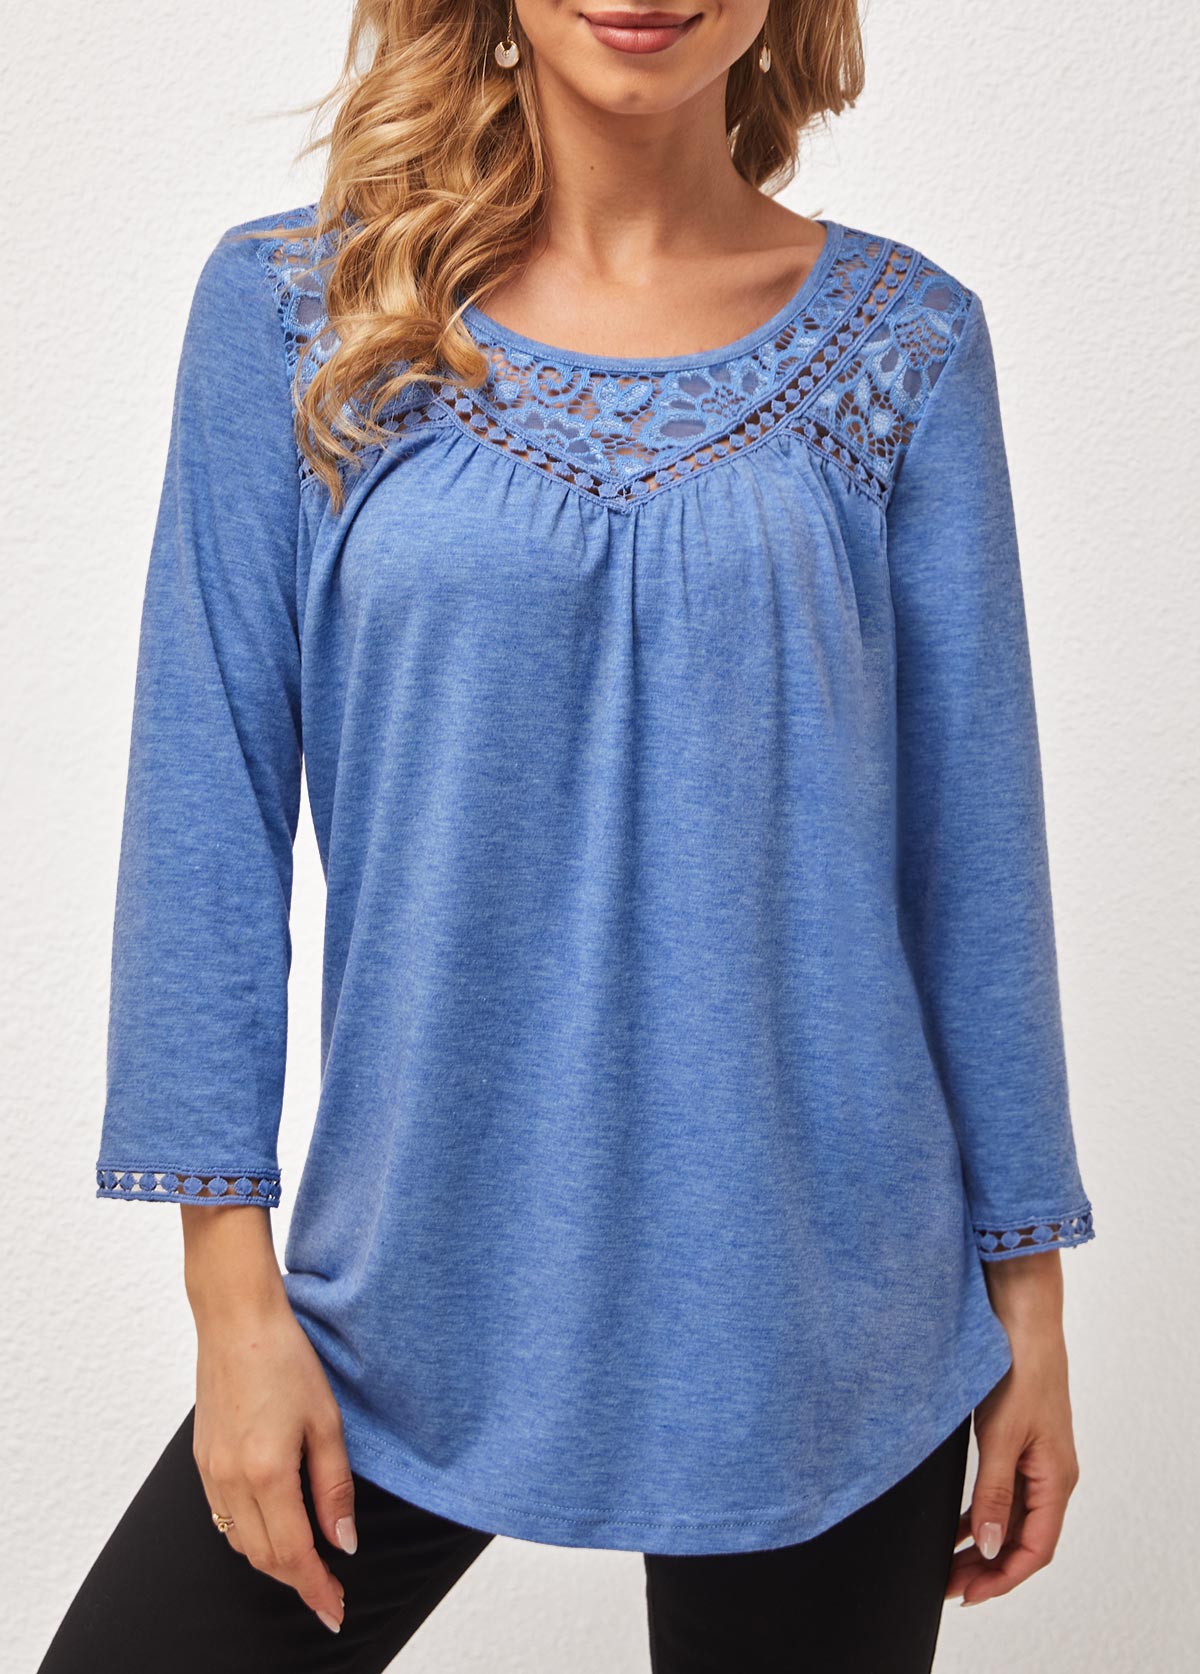 Lace Stitching Round Neck Blue T Shirt | modlily.com - USD 32.98